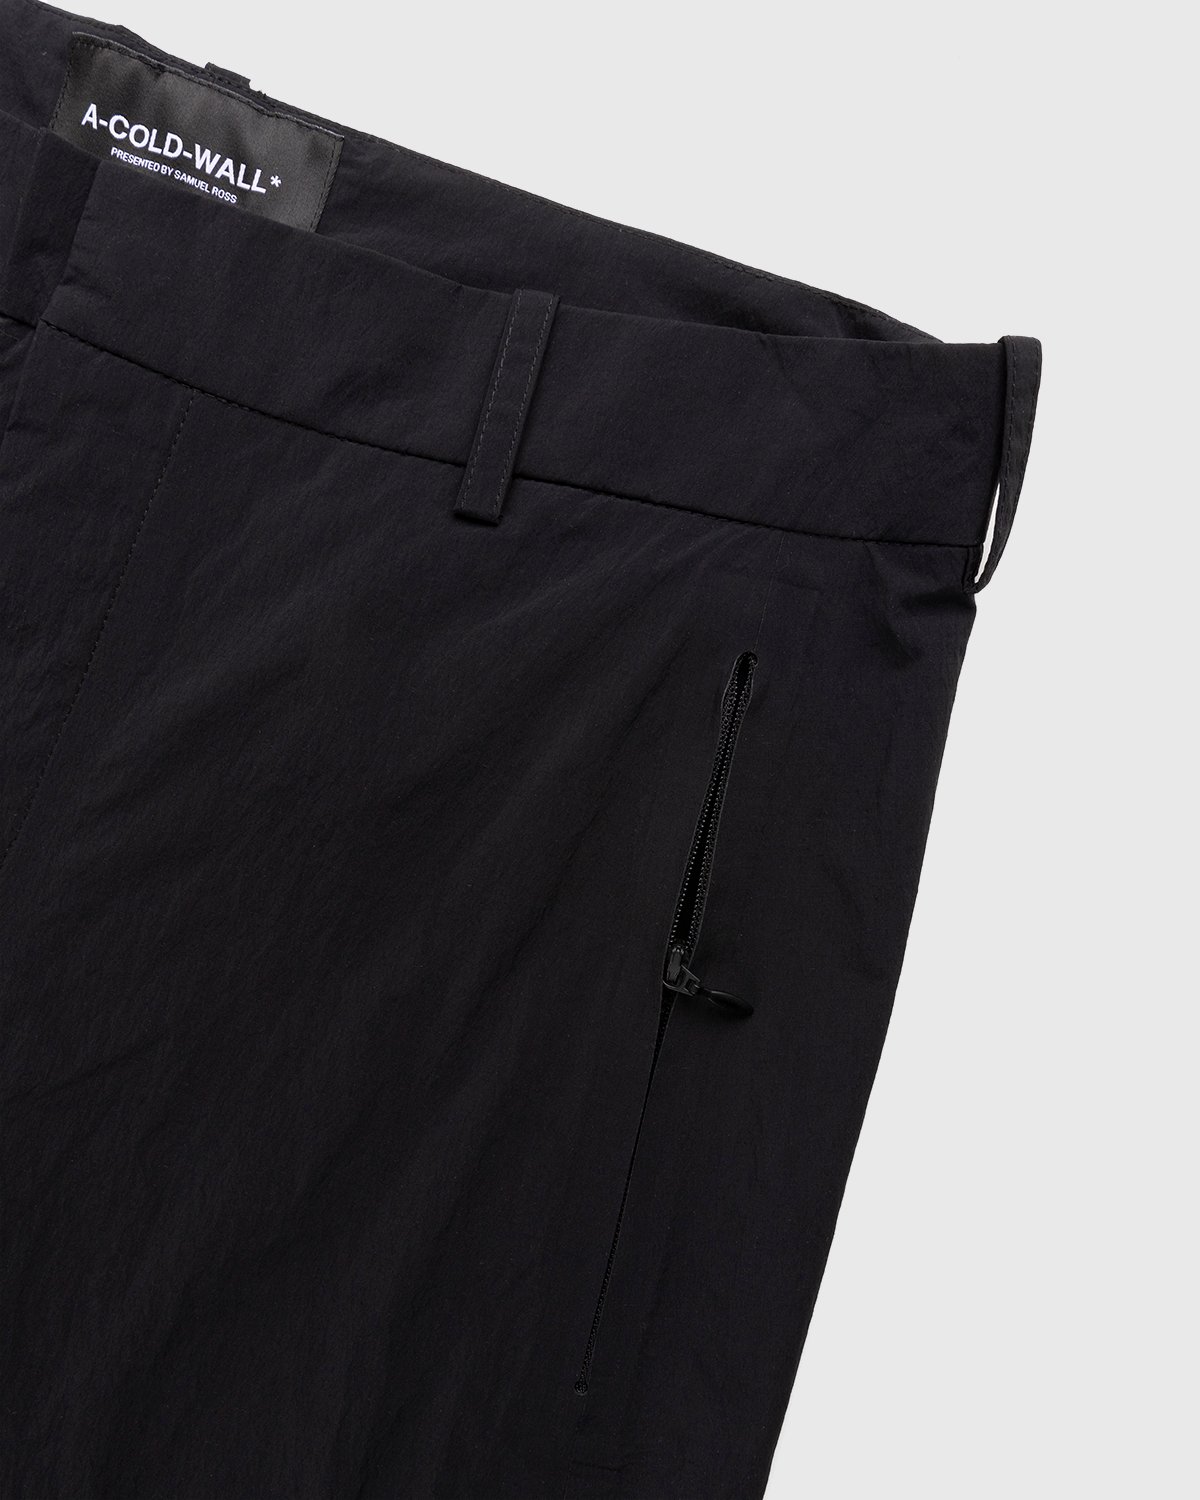 A-Cold-Wall* - Stealth Nylon Pant Black - Clothing - Black - Image 4